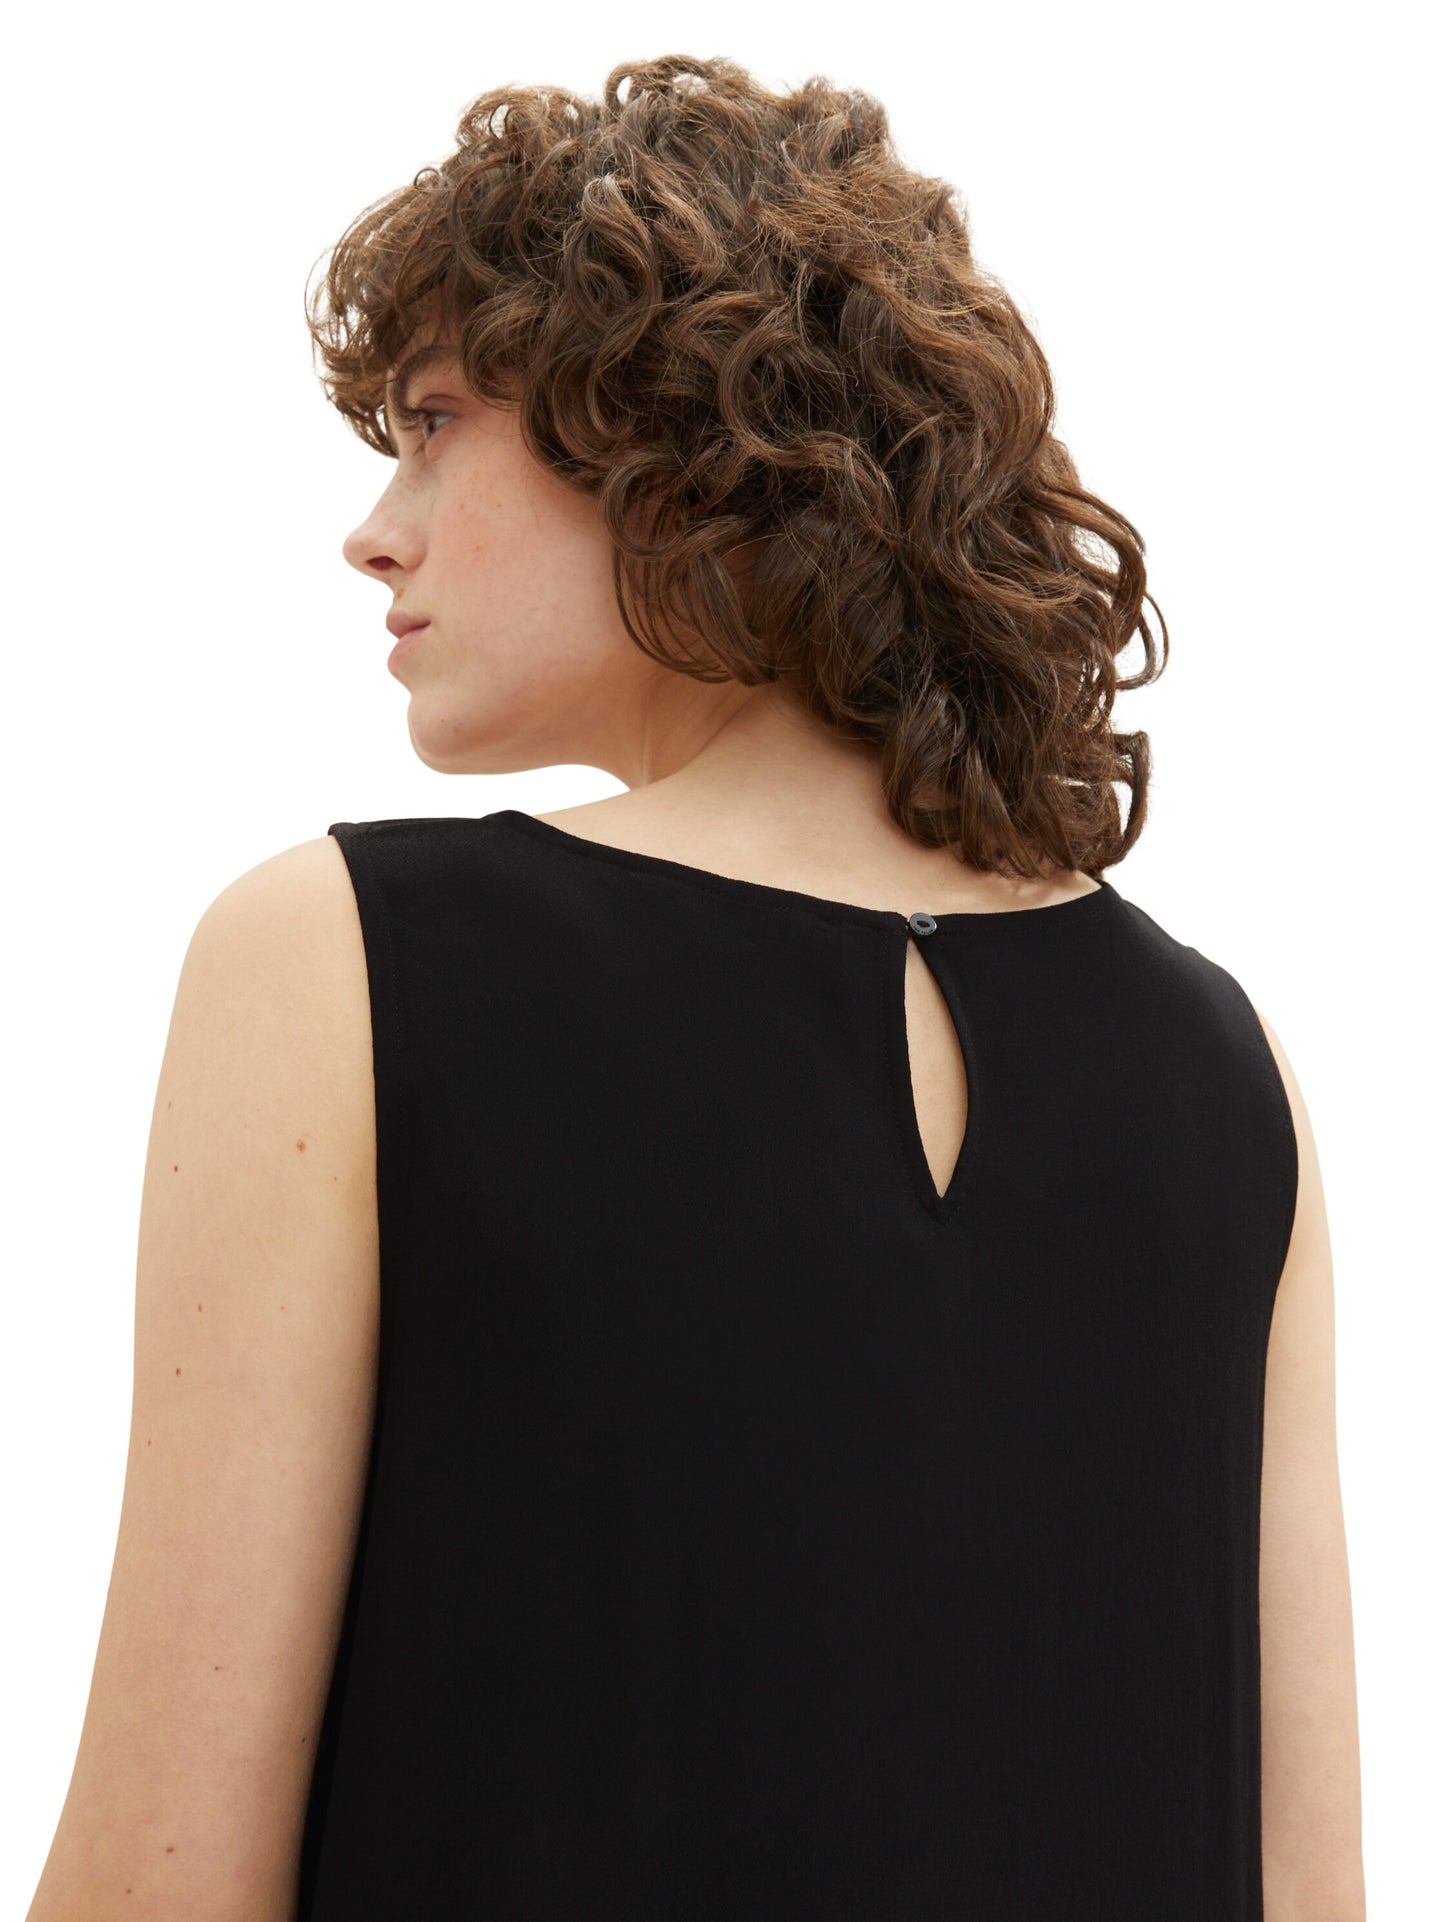 sleeveless dress with volant - 1037234